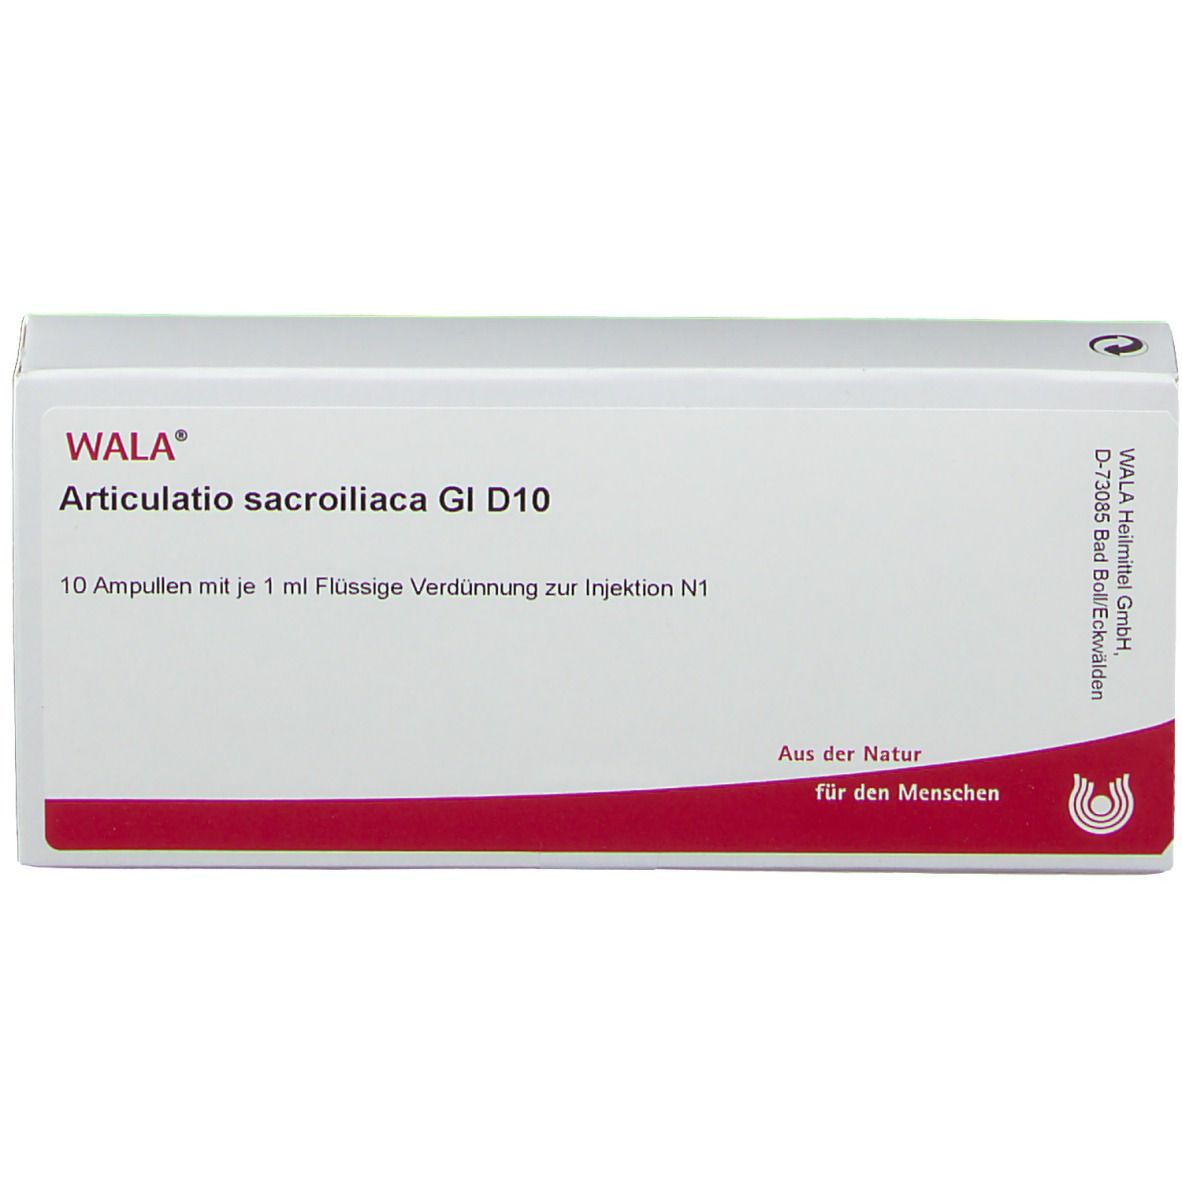 WALA® Articulatio sacroiliaca Gl D 10